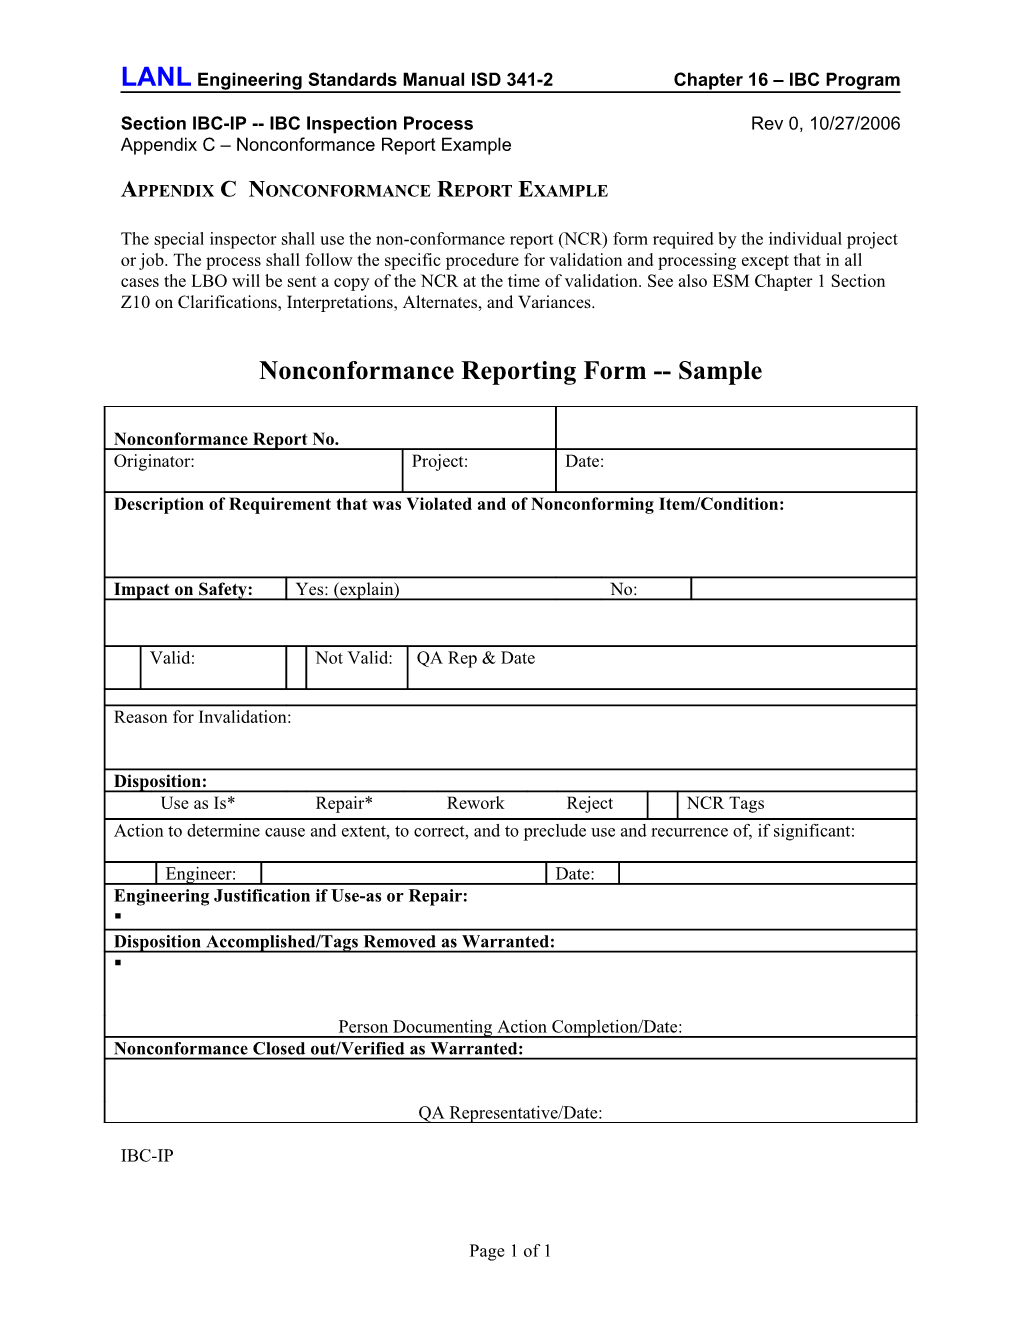 Appendix C Nonconformance Report Example